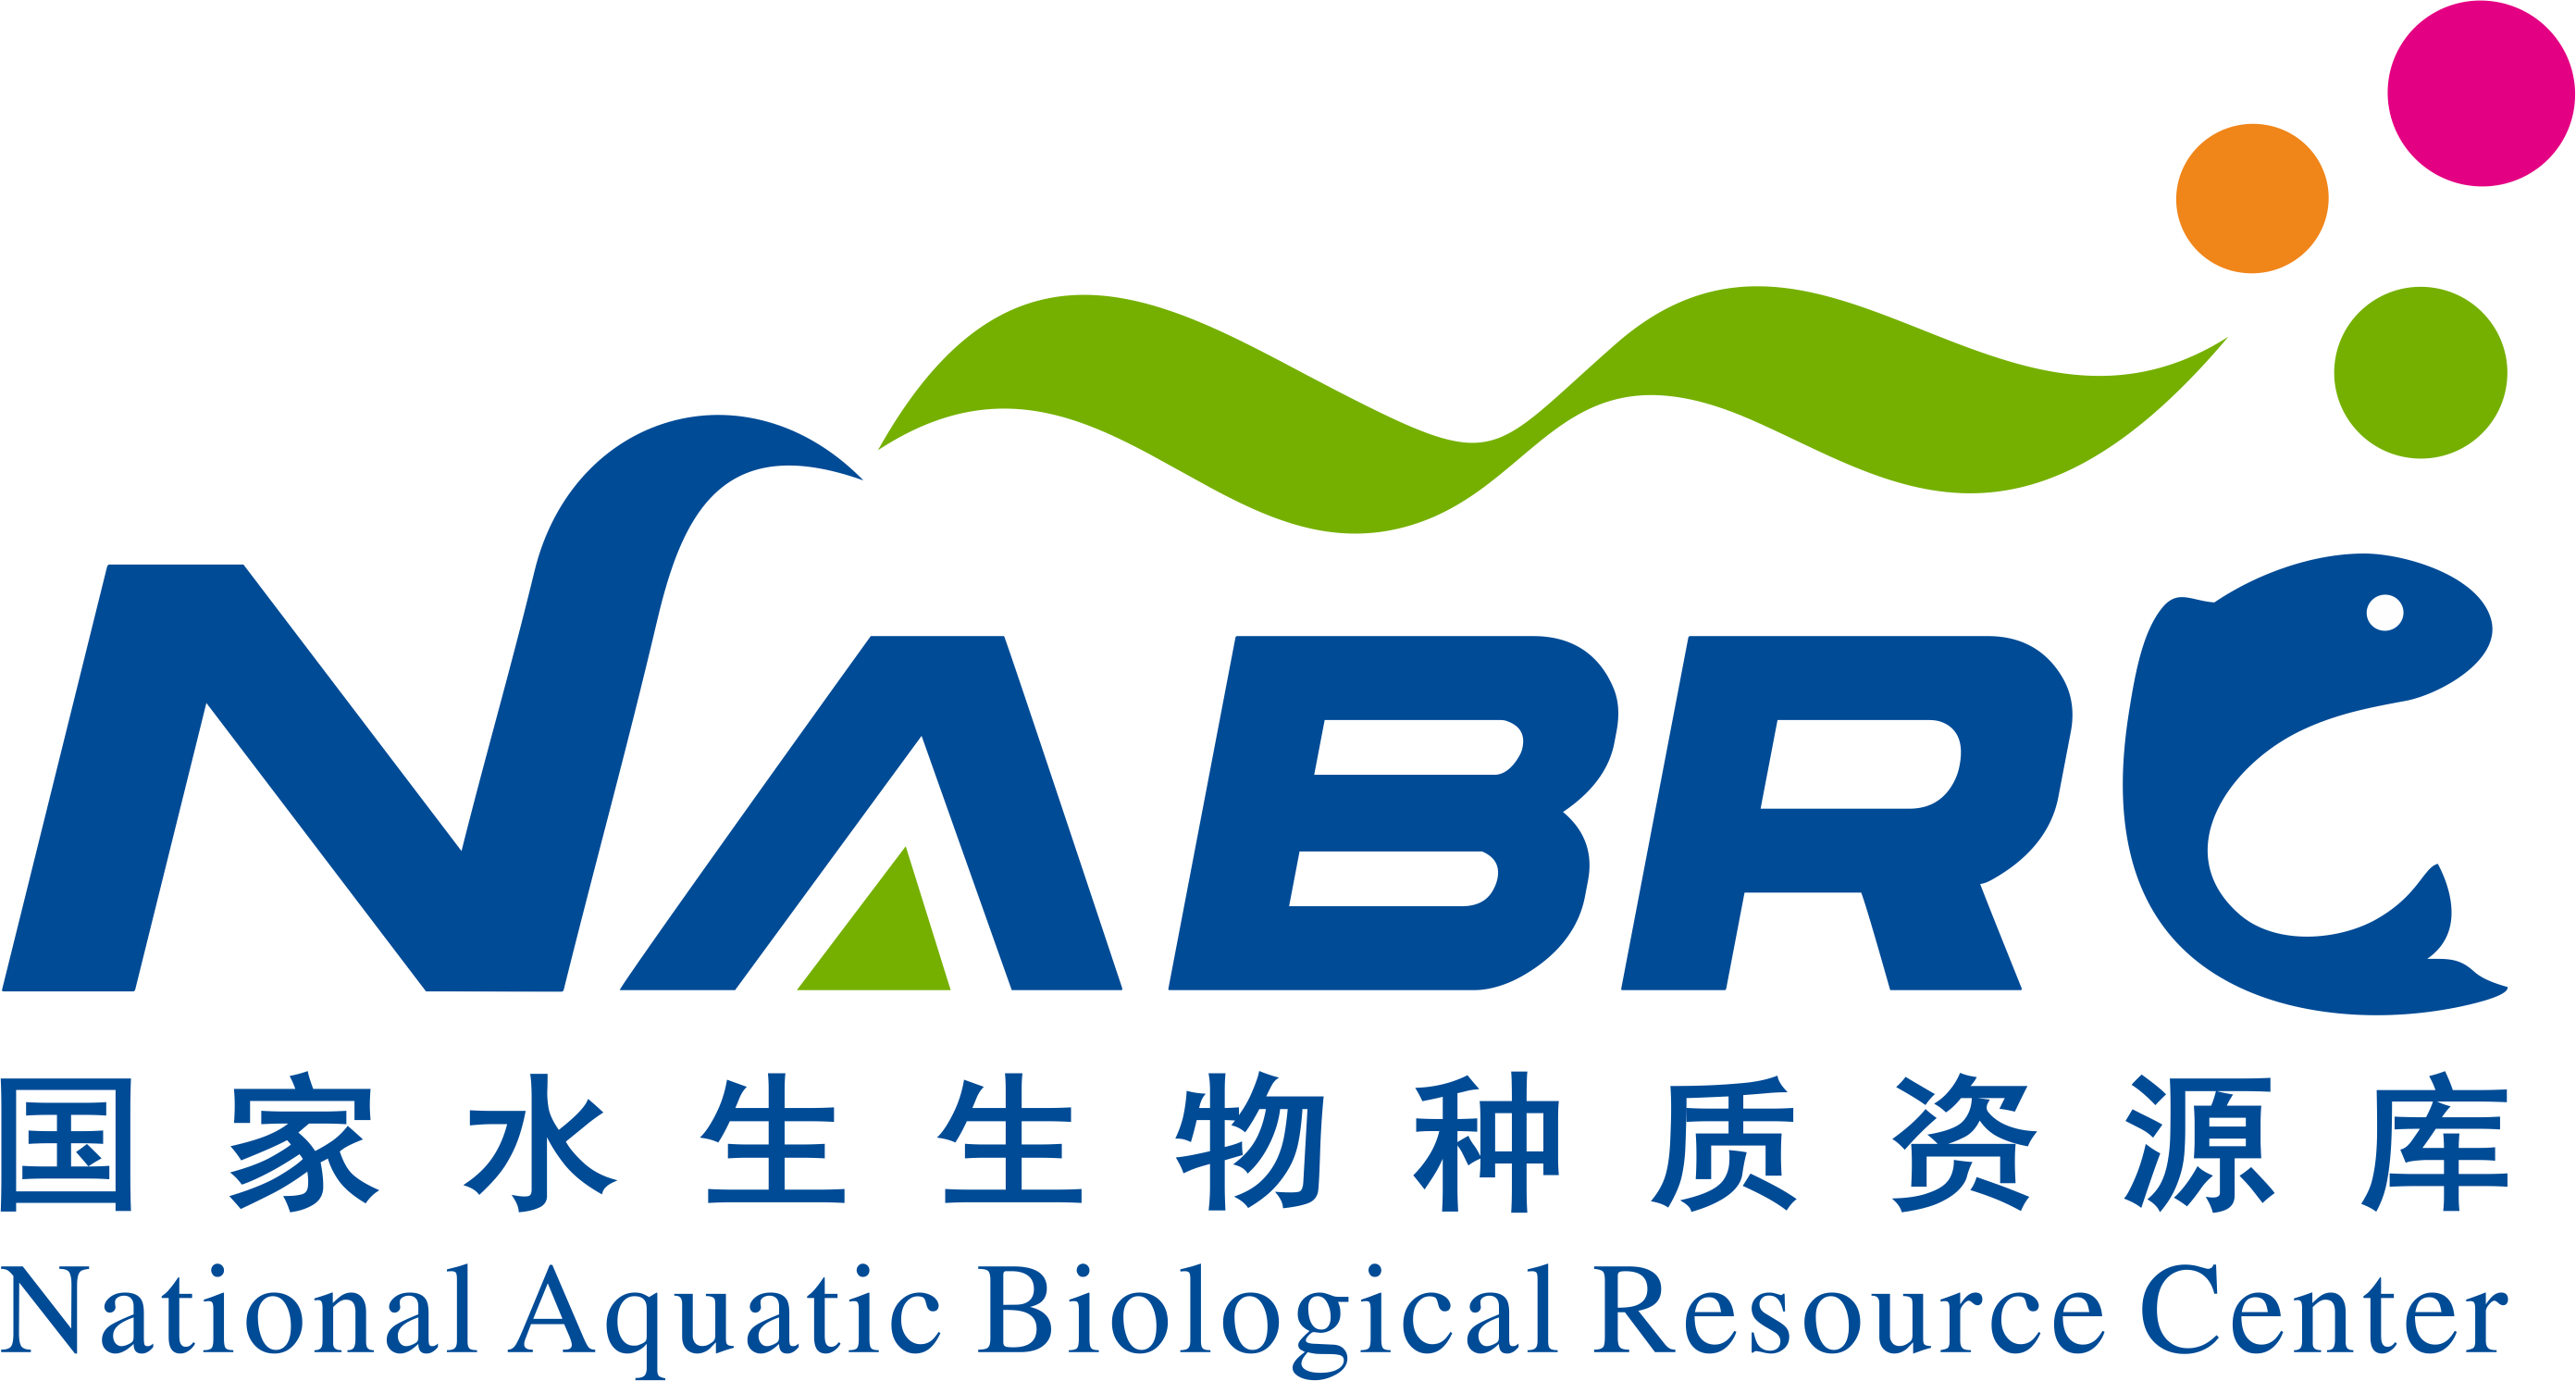 National Aquatic Biological Resource Center